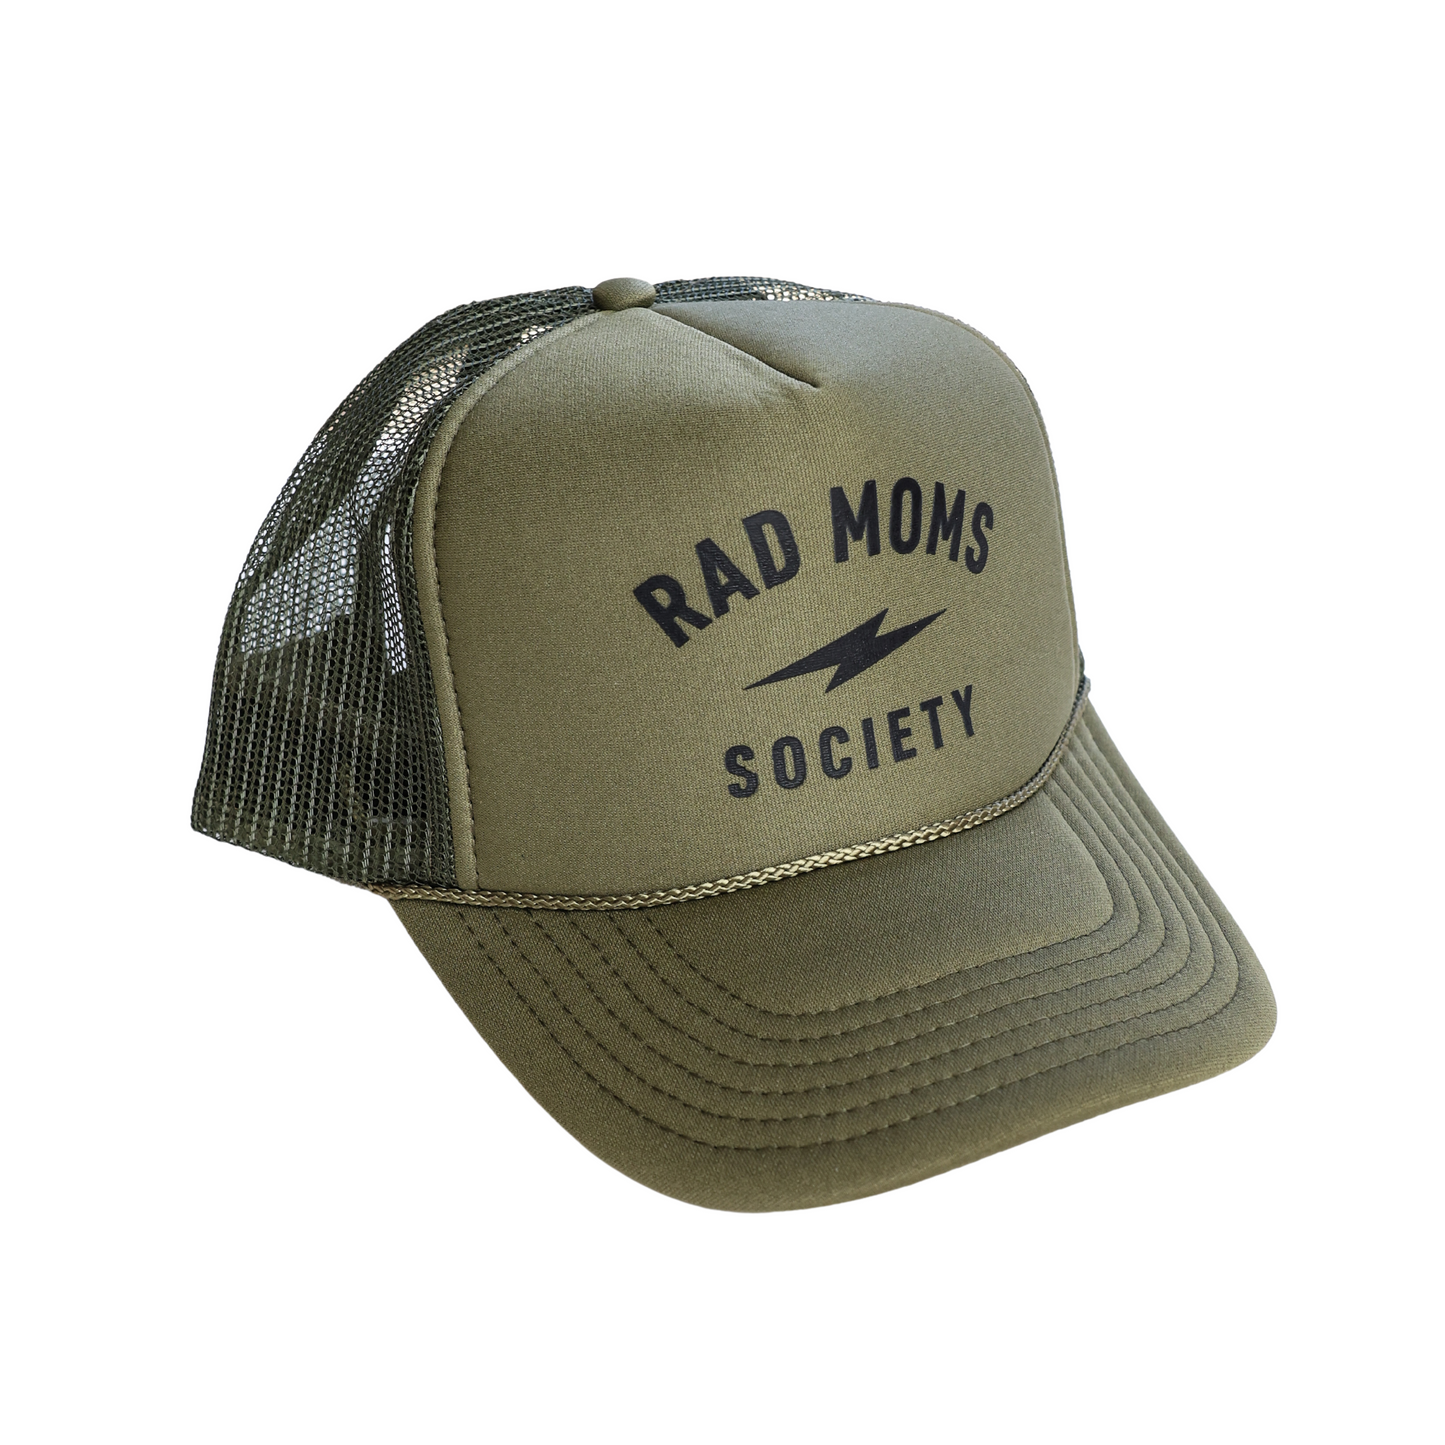 RAD MOMS SOCIETY- OLIVE